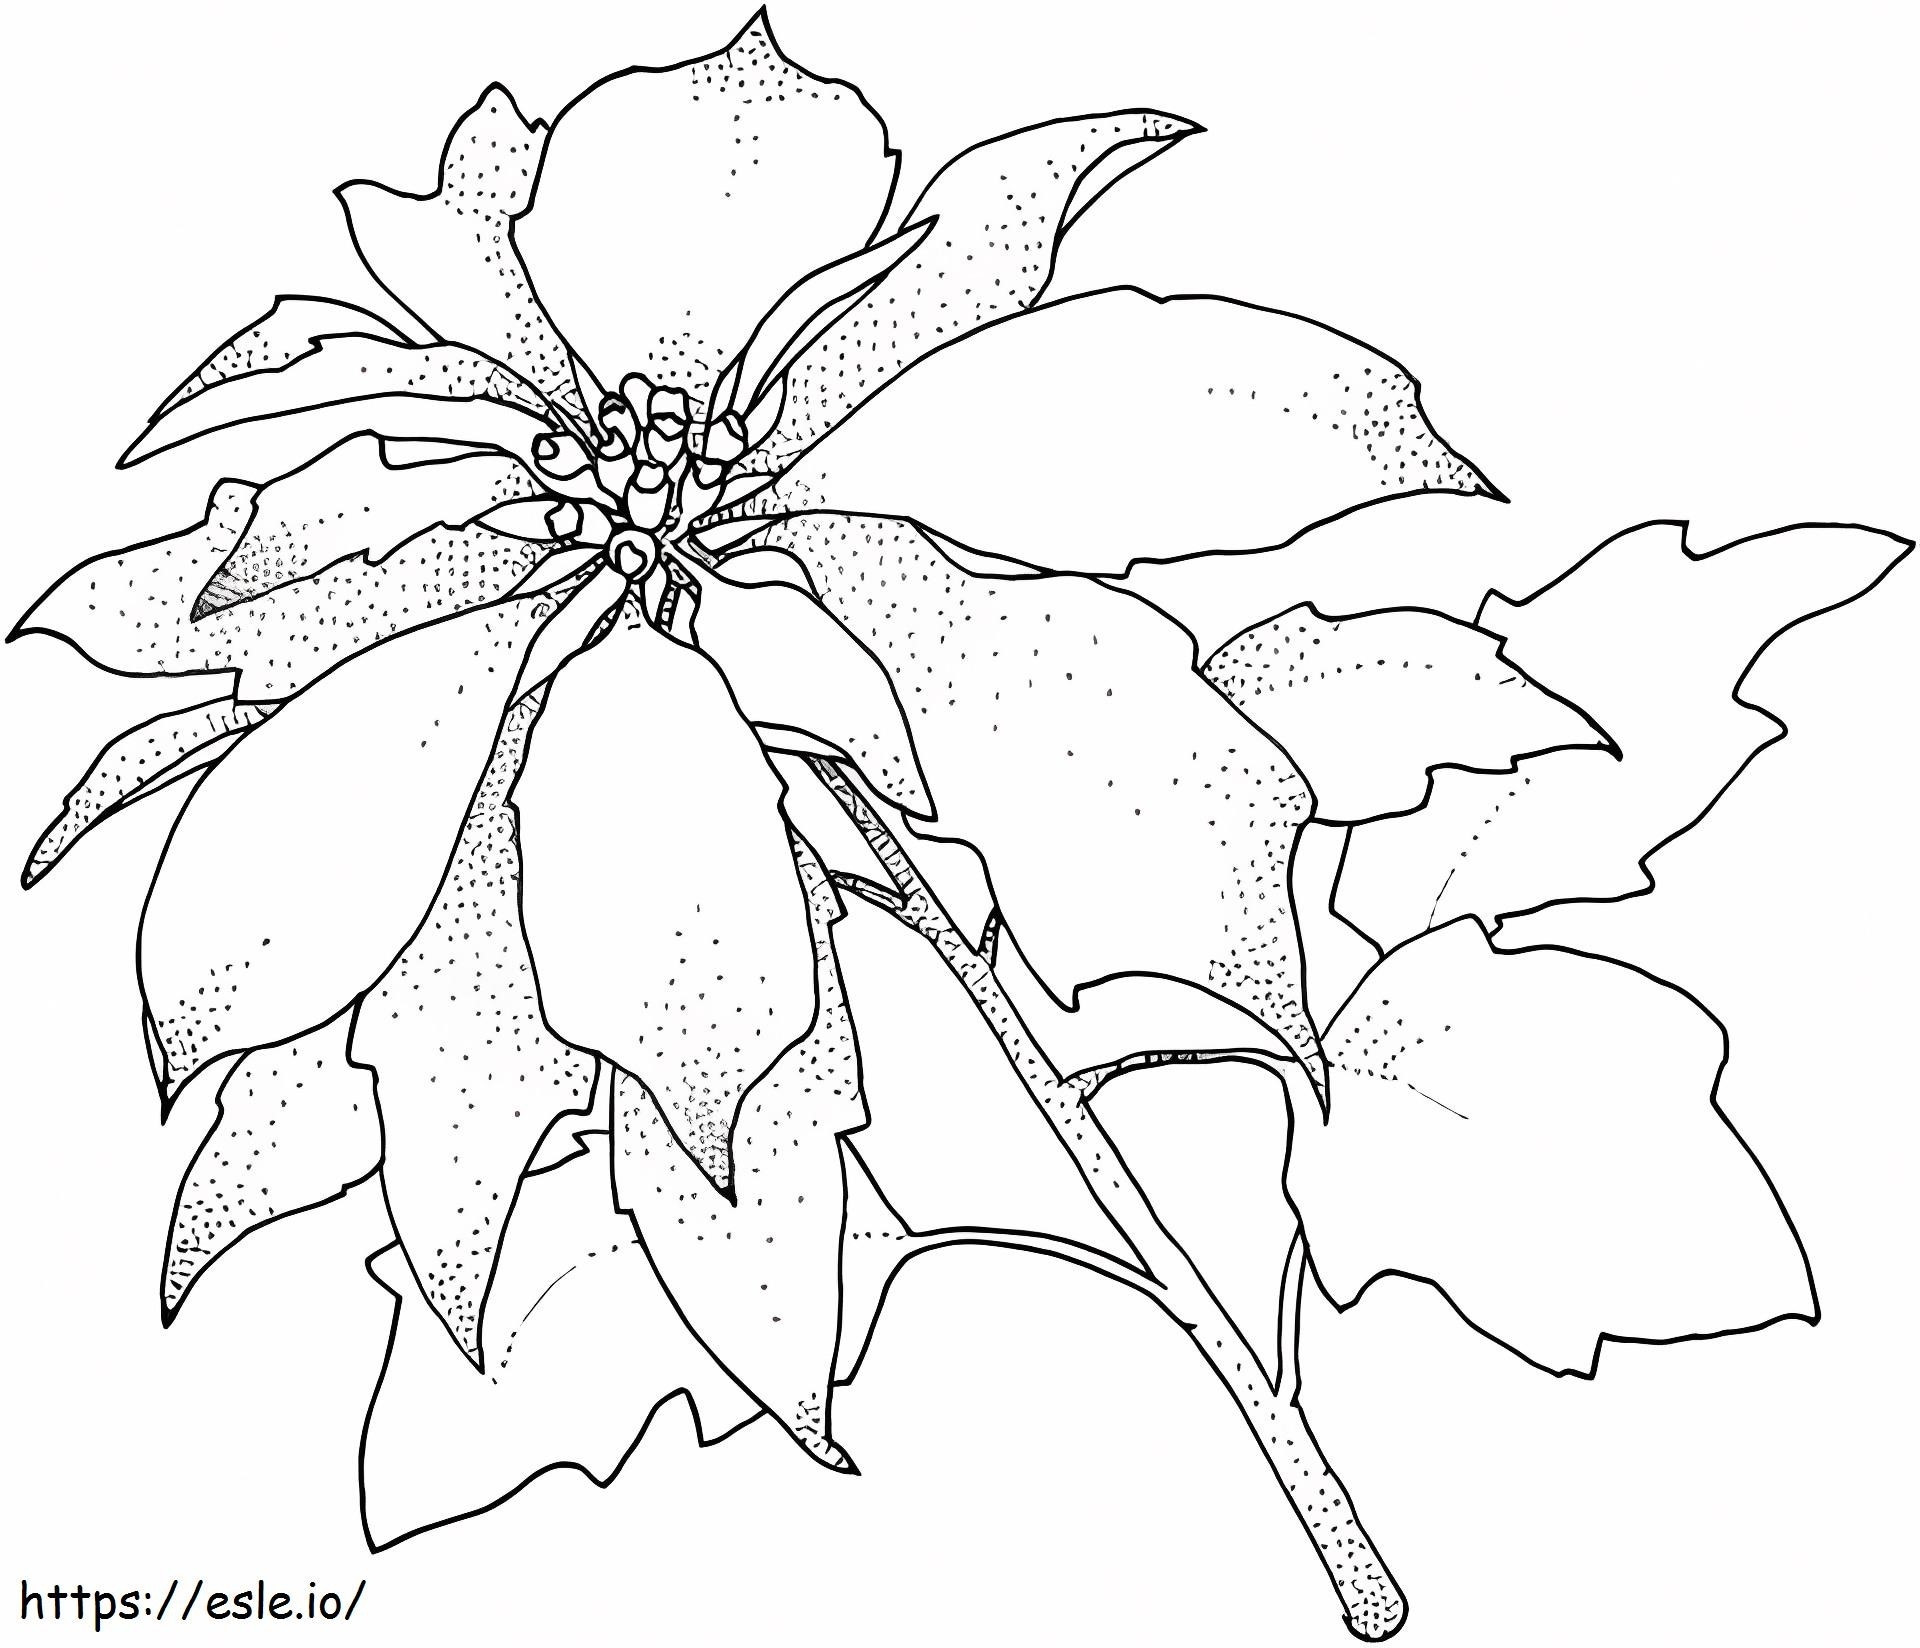 1527064192_Flor de Navidad Poinsettia para colorear